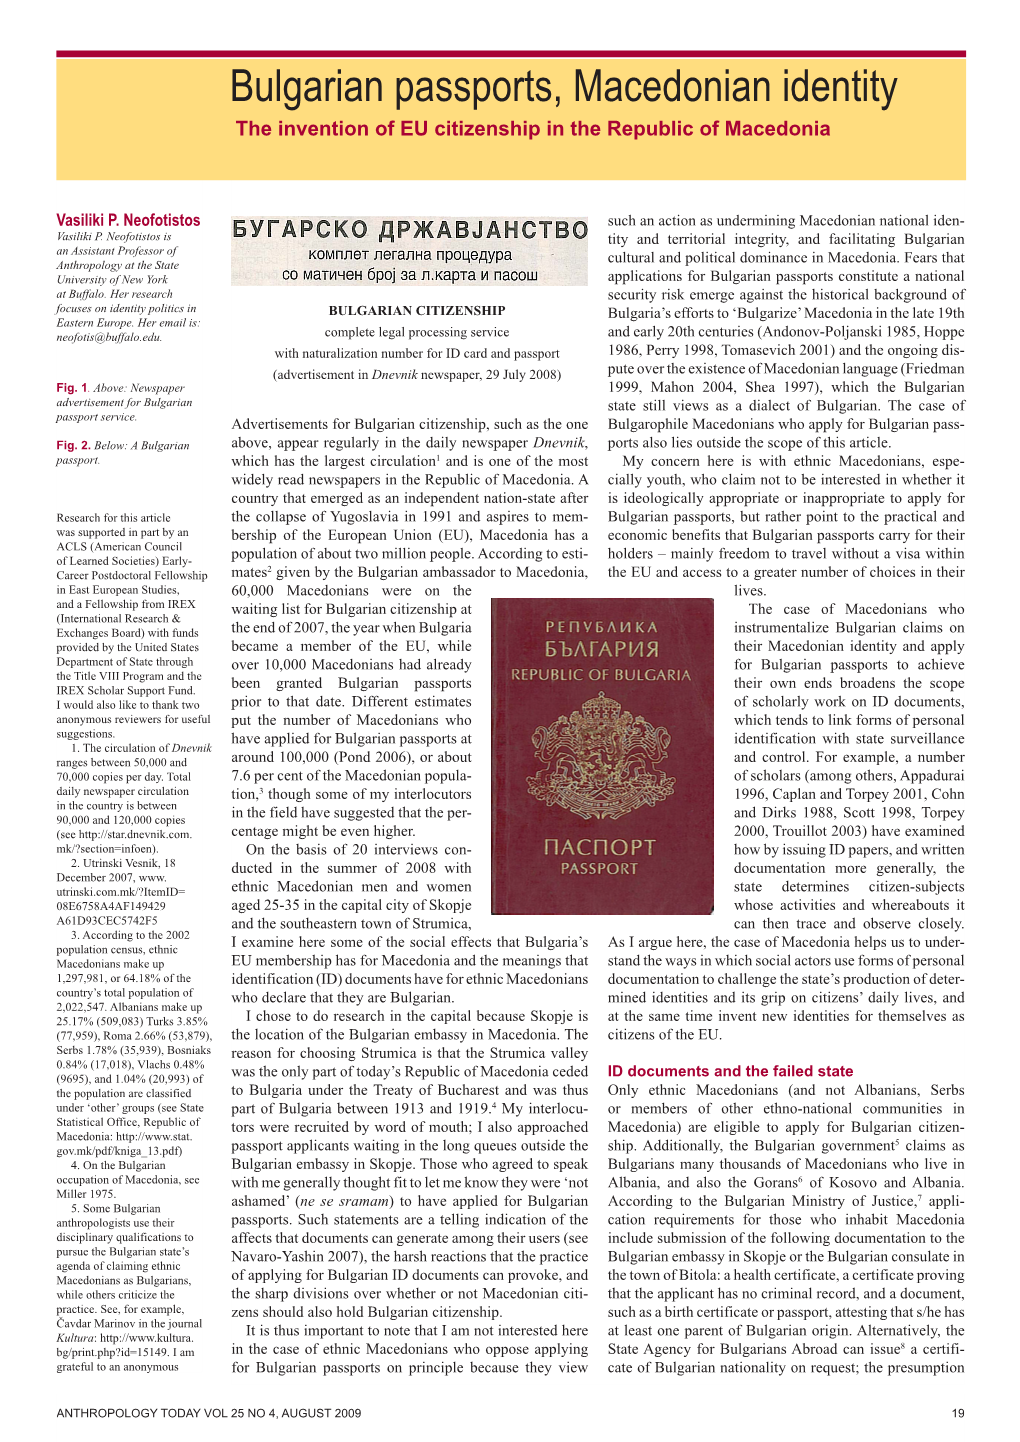 Bulgarian Passports, Macedonian Identity the Invention of EU Citizenship in the Republic of Macedonia